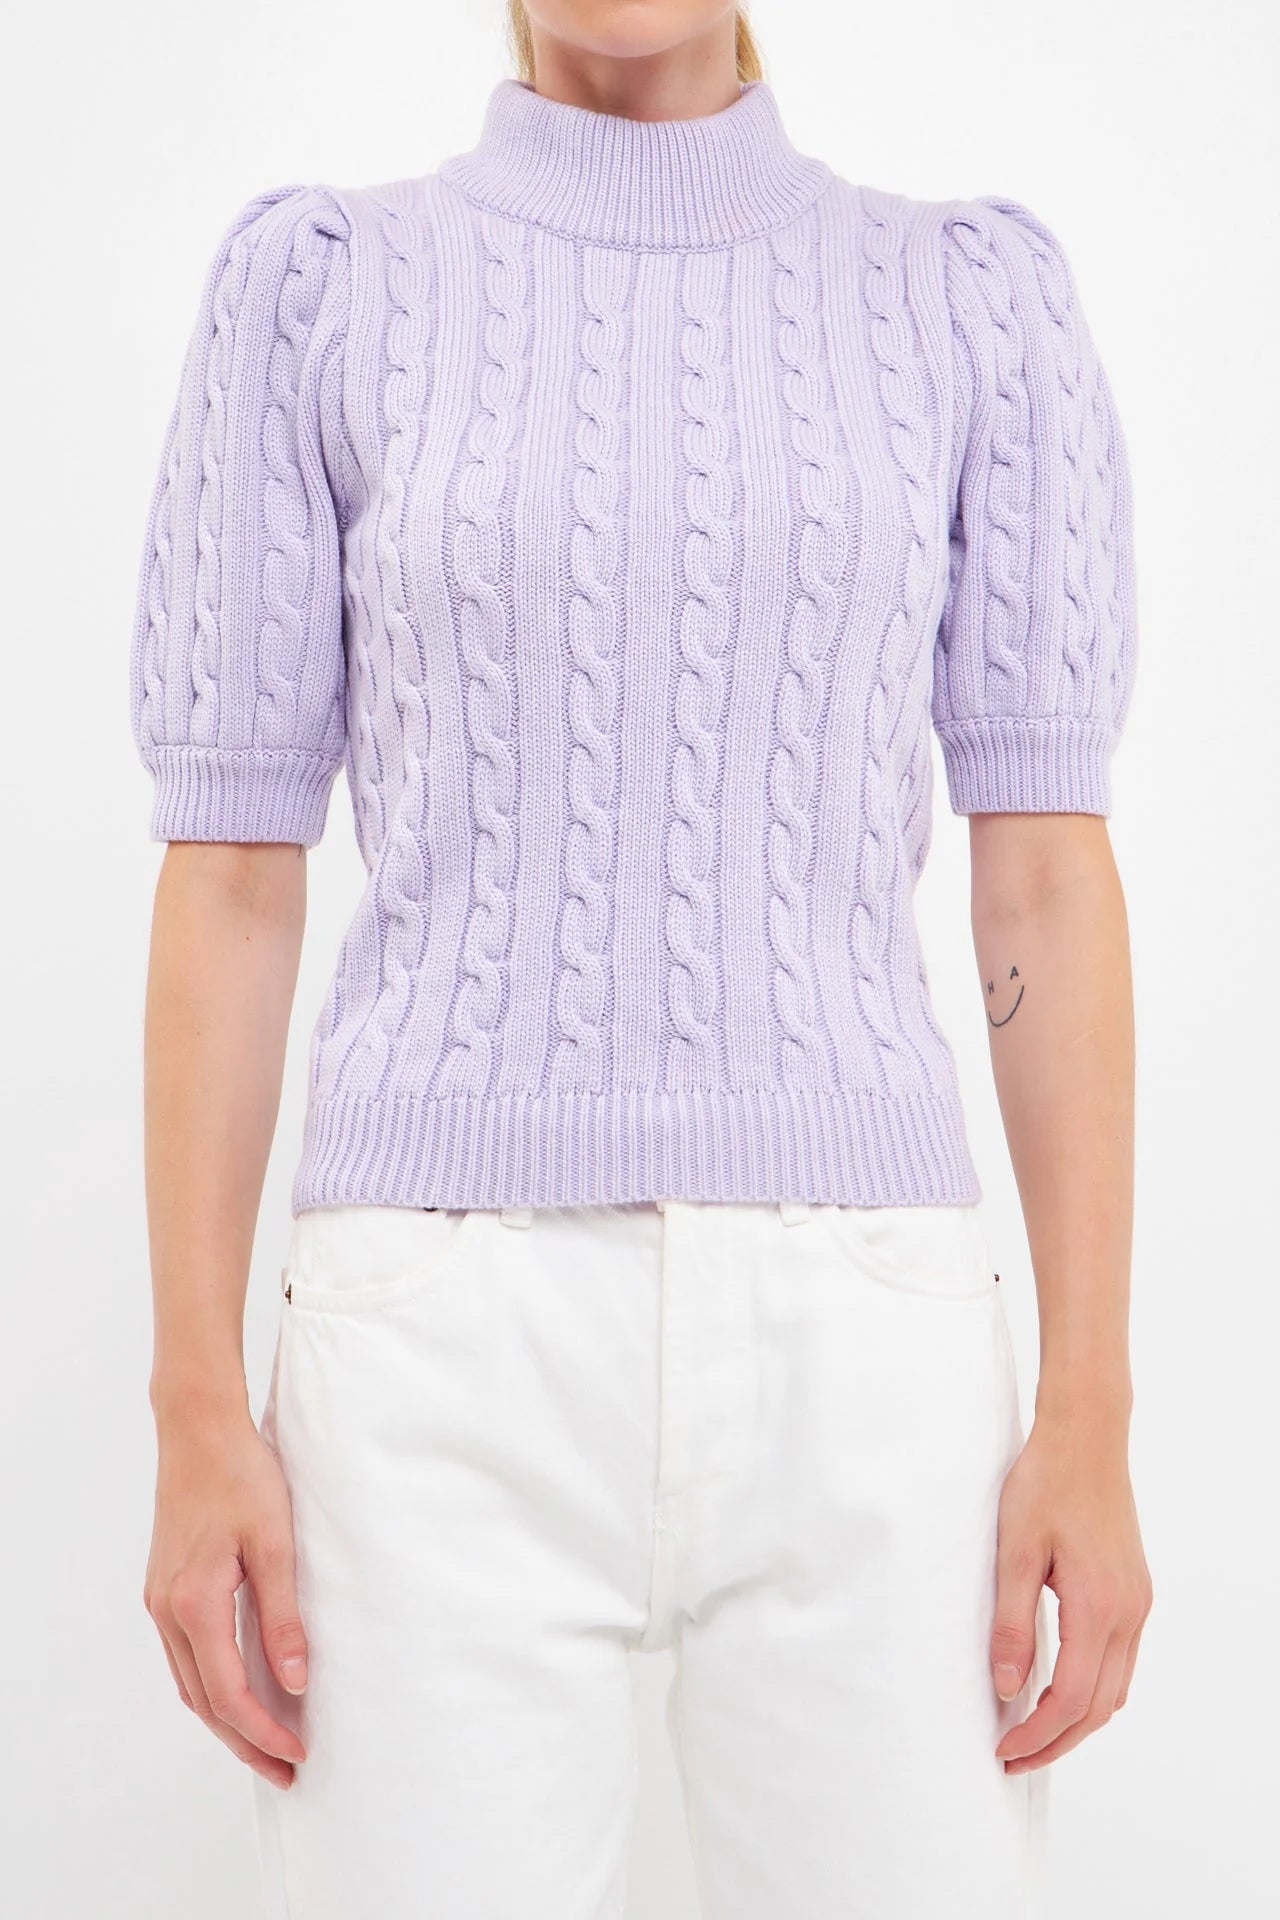 Short-Sleeve Cable-Knit Sweater - Lush Lemon - Women's Clothing - English Factory - 192934460989